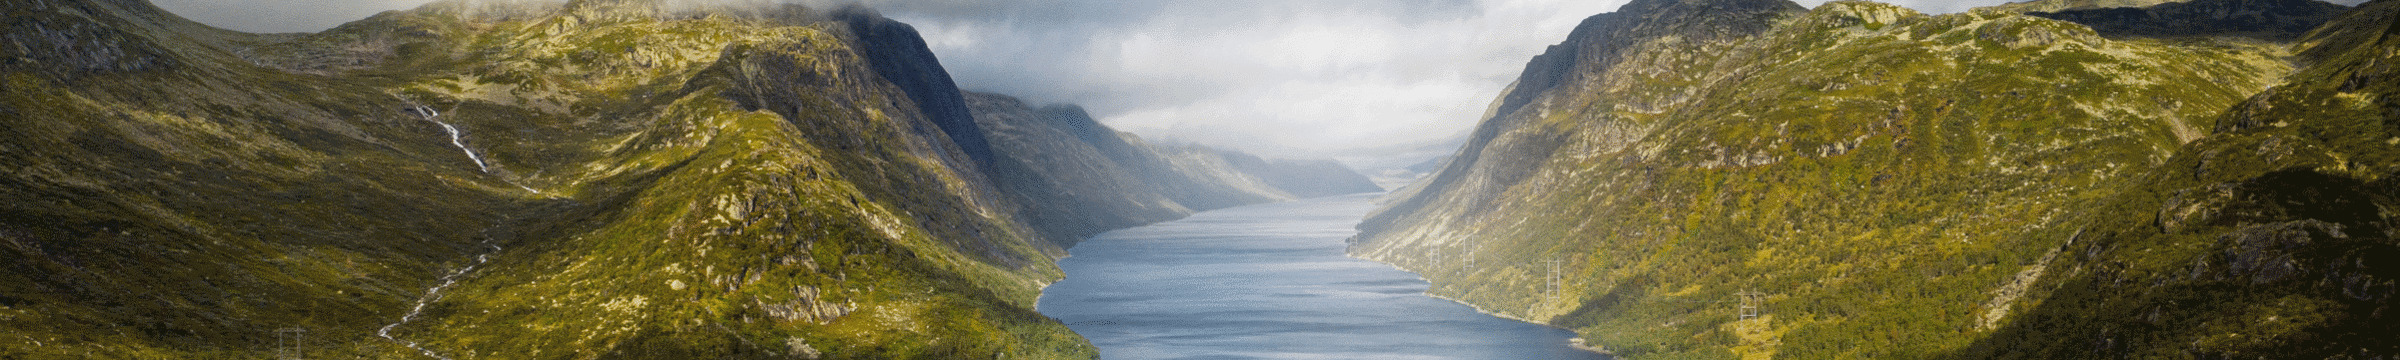 Der Bitdal-Staudamm in Norwegen